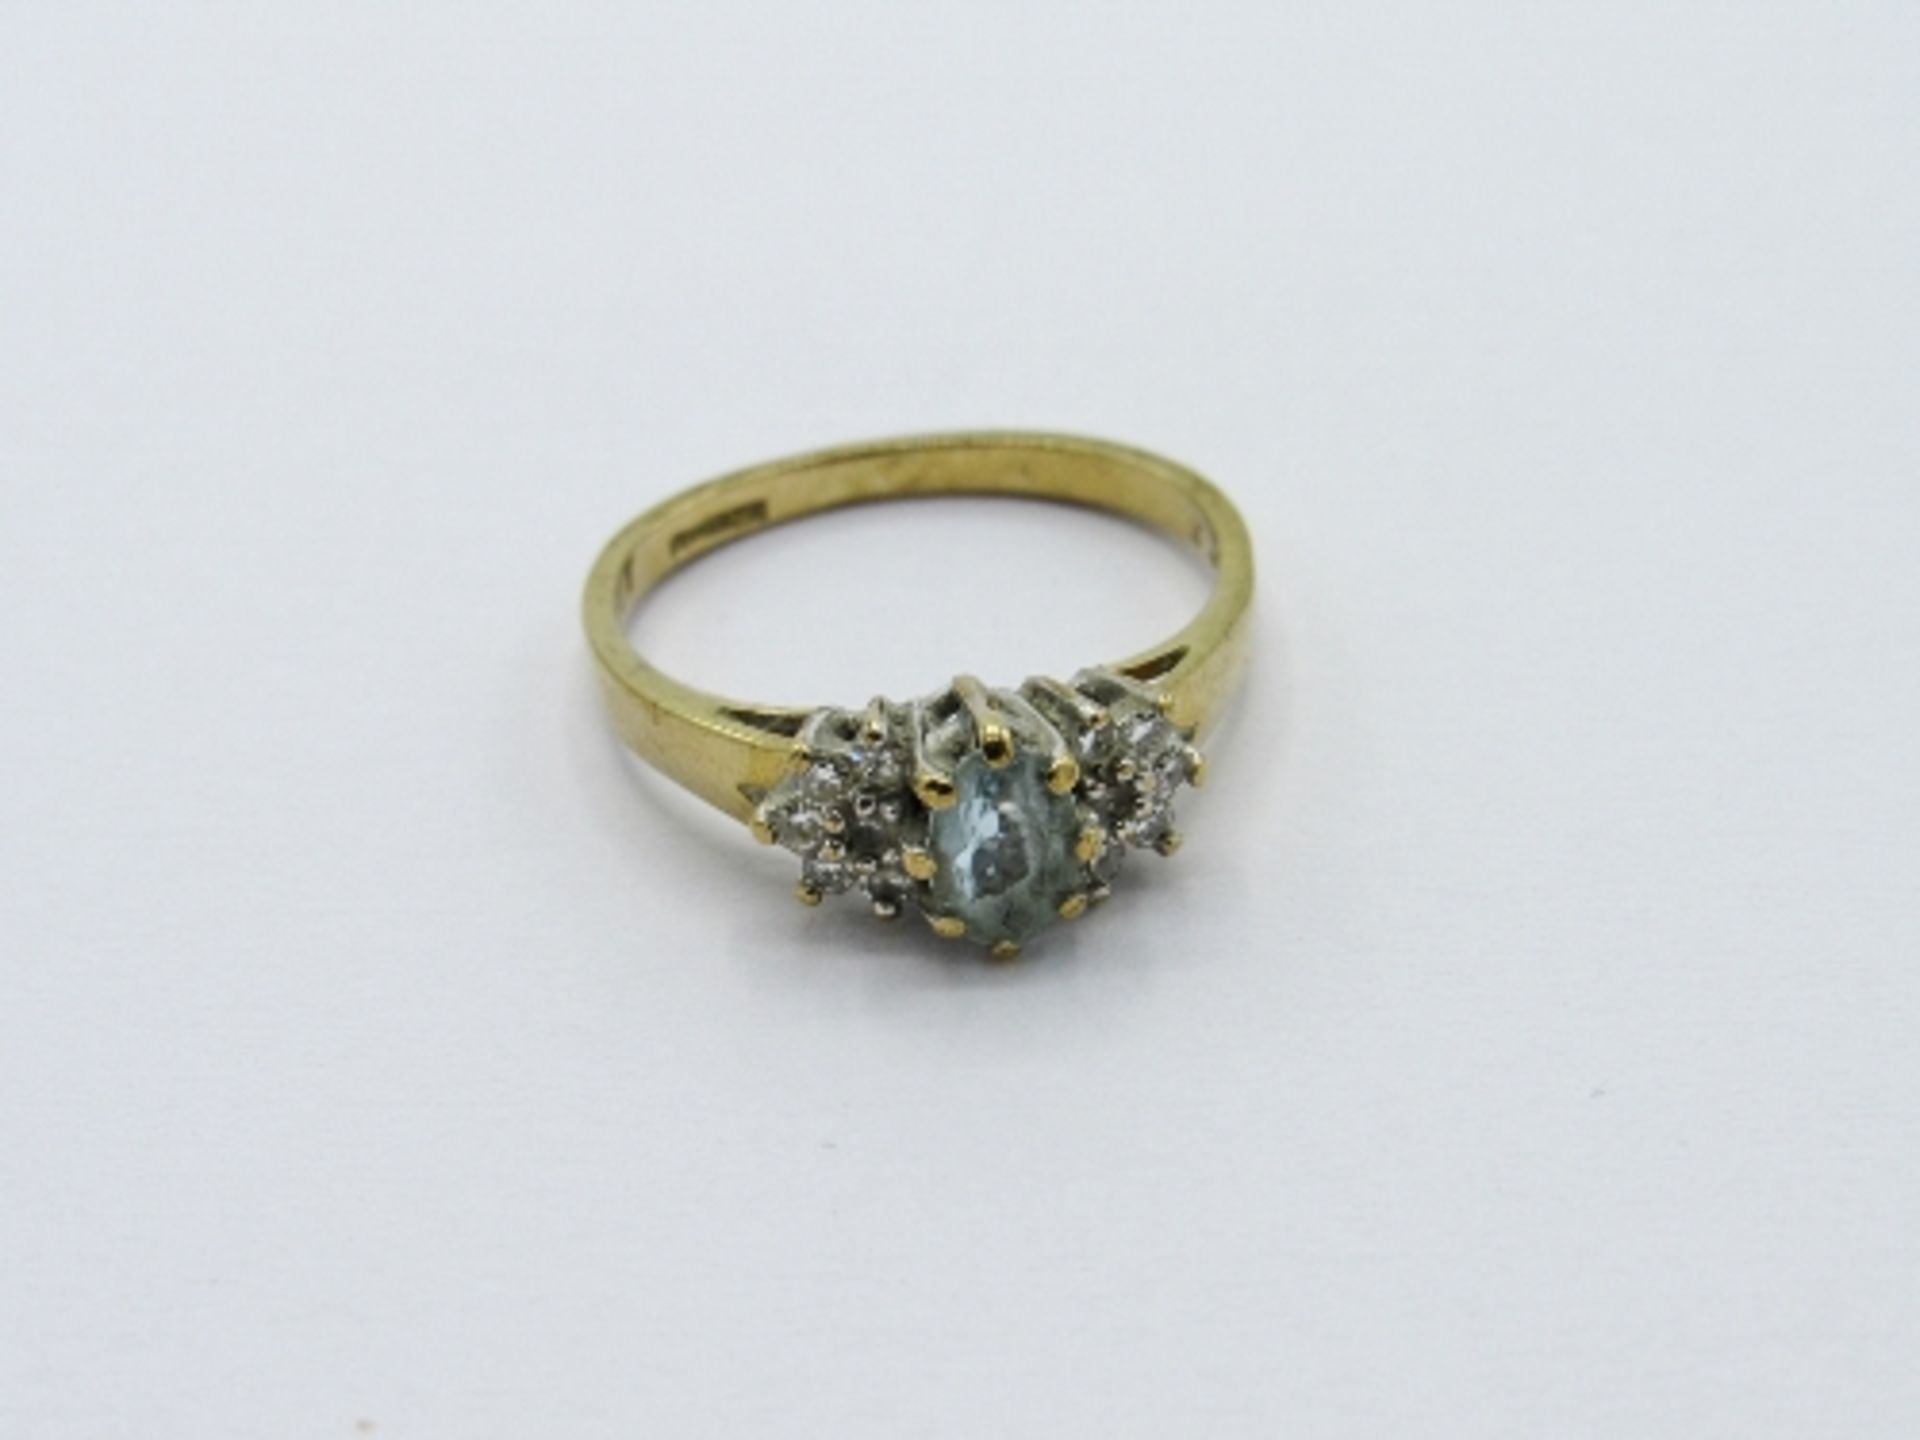 9ct gold diamond & aquamarine ring, weight 1.5gms, size M. Estimate £20-30 - Image 2 of 2